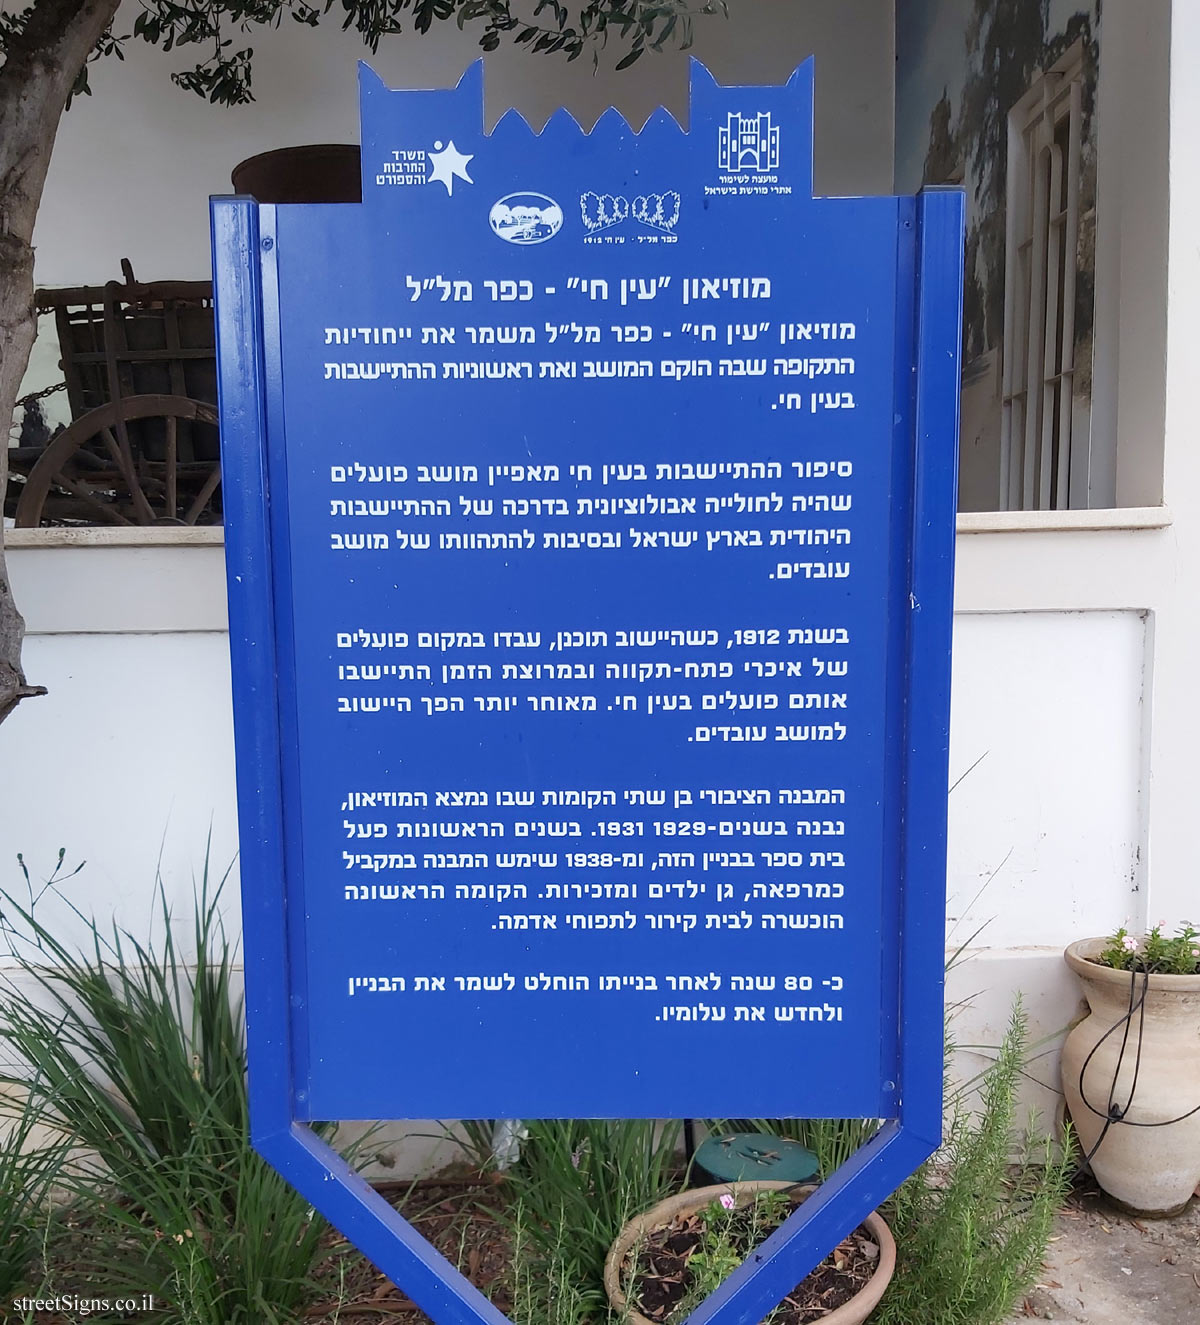 Kfar Malal - Heritage Sites in Israel - Museum "Ein Hai" - Kfar Malal